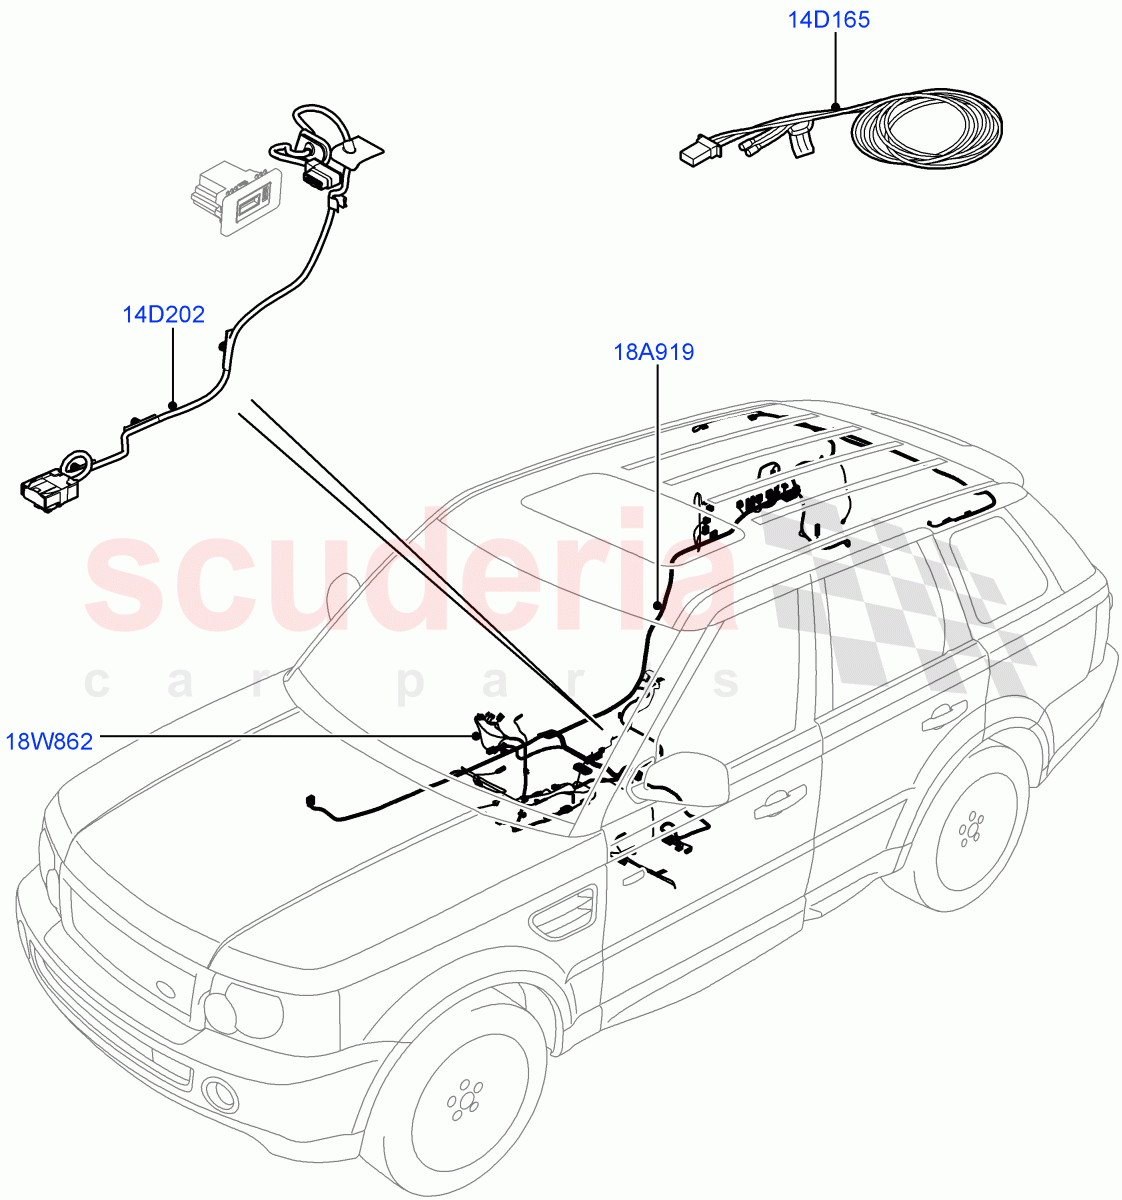 Electrical Wiring - Body And Rear(Audio/Navigation/Entertainment)((V)FROMBA000001,(V)TOBA999999) of Land Rover Land Rover Range Rover Sport (2010-2013) [3.6 V8 32V DOHC EFI Diesel]